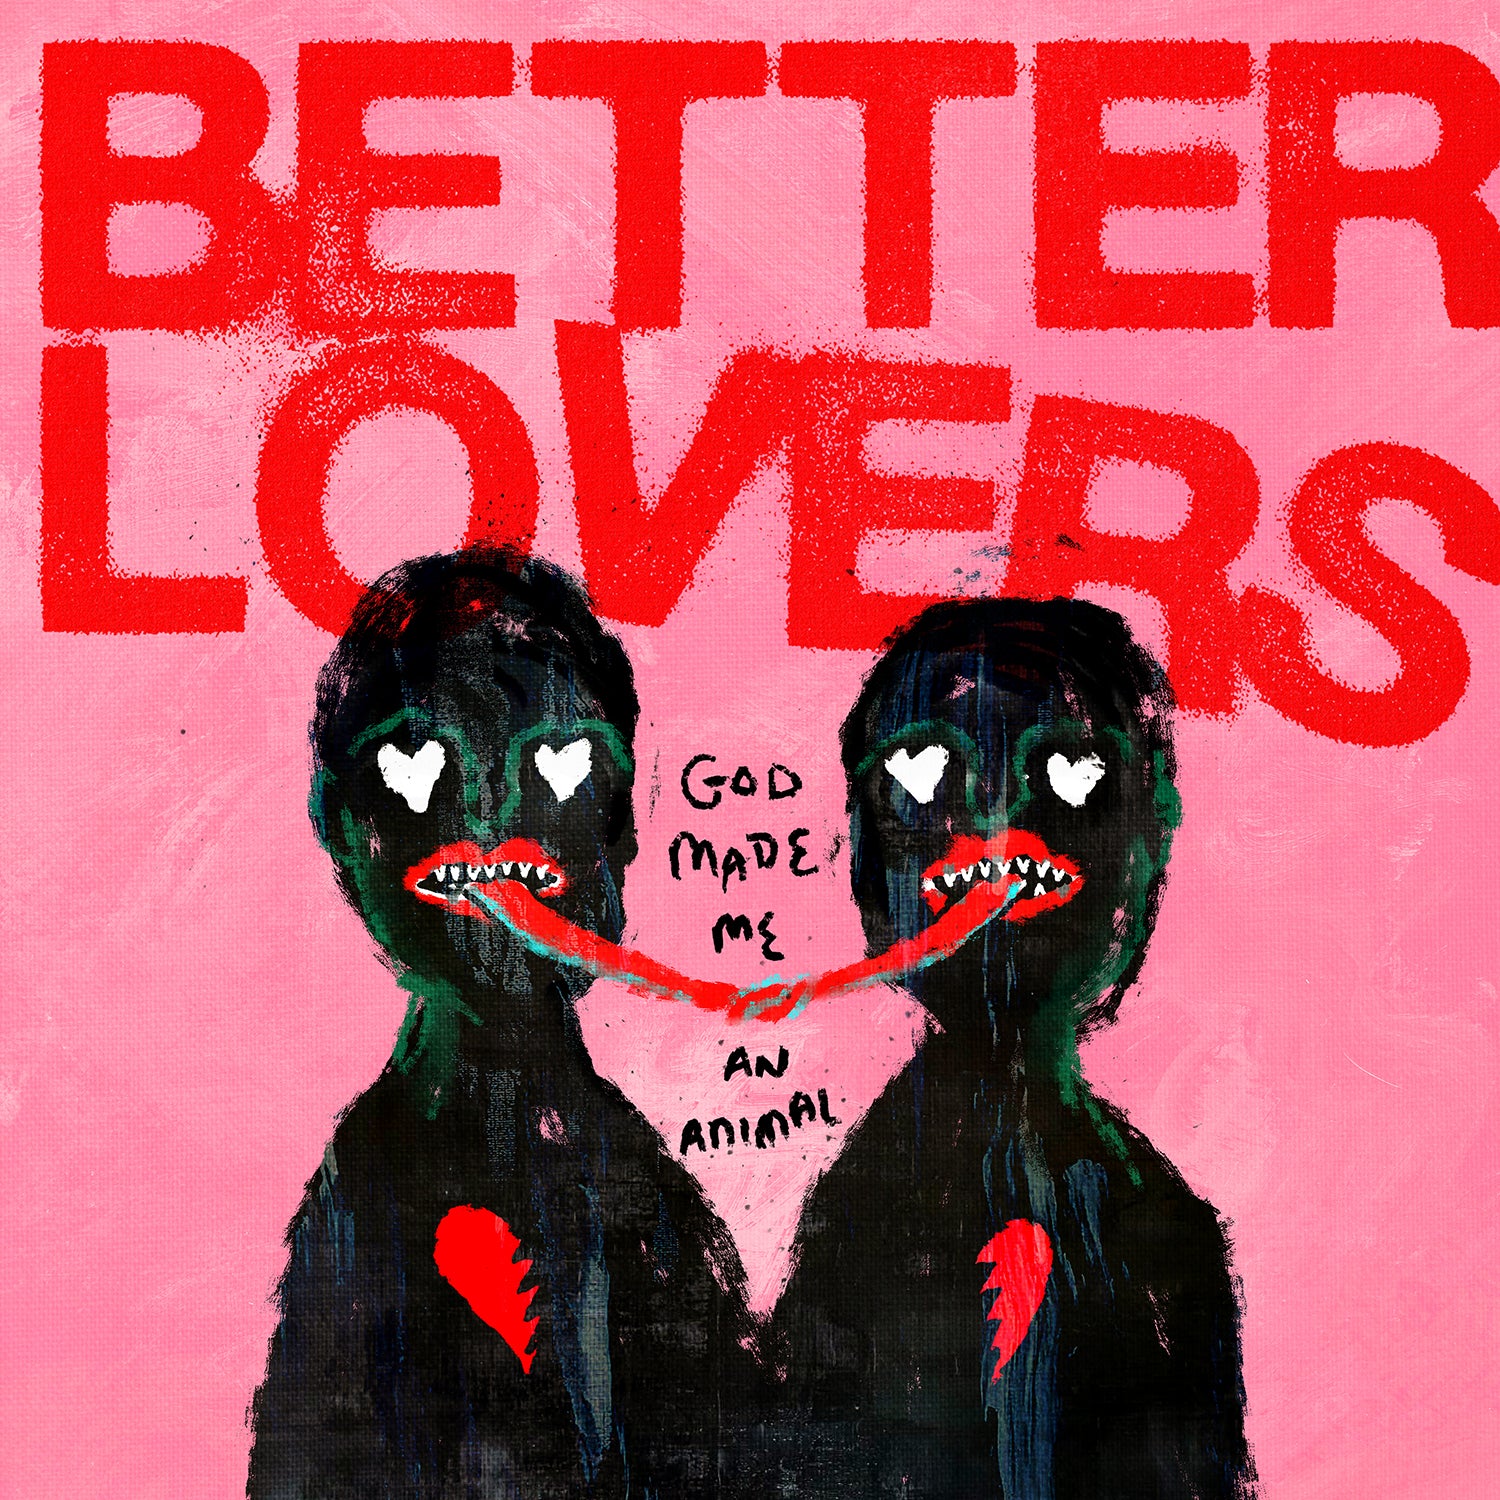 Better Lovers - God Made Me An Animal